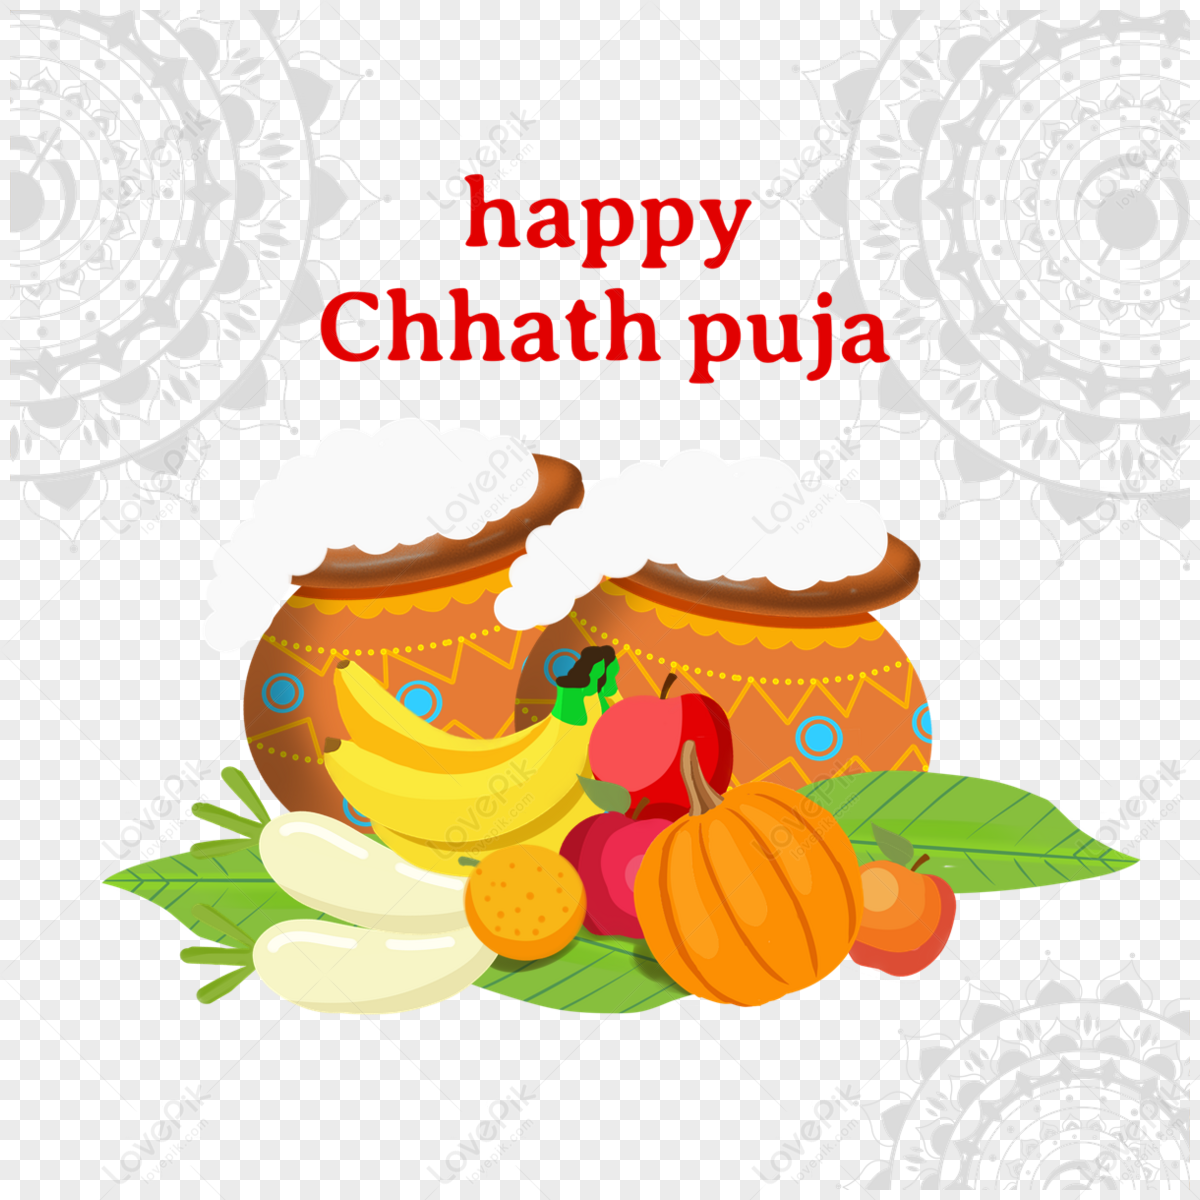 Happy Chhath Puja Images - Free Download on Freepik